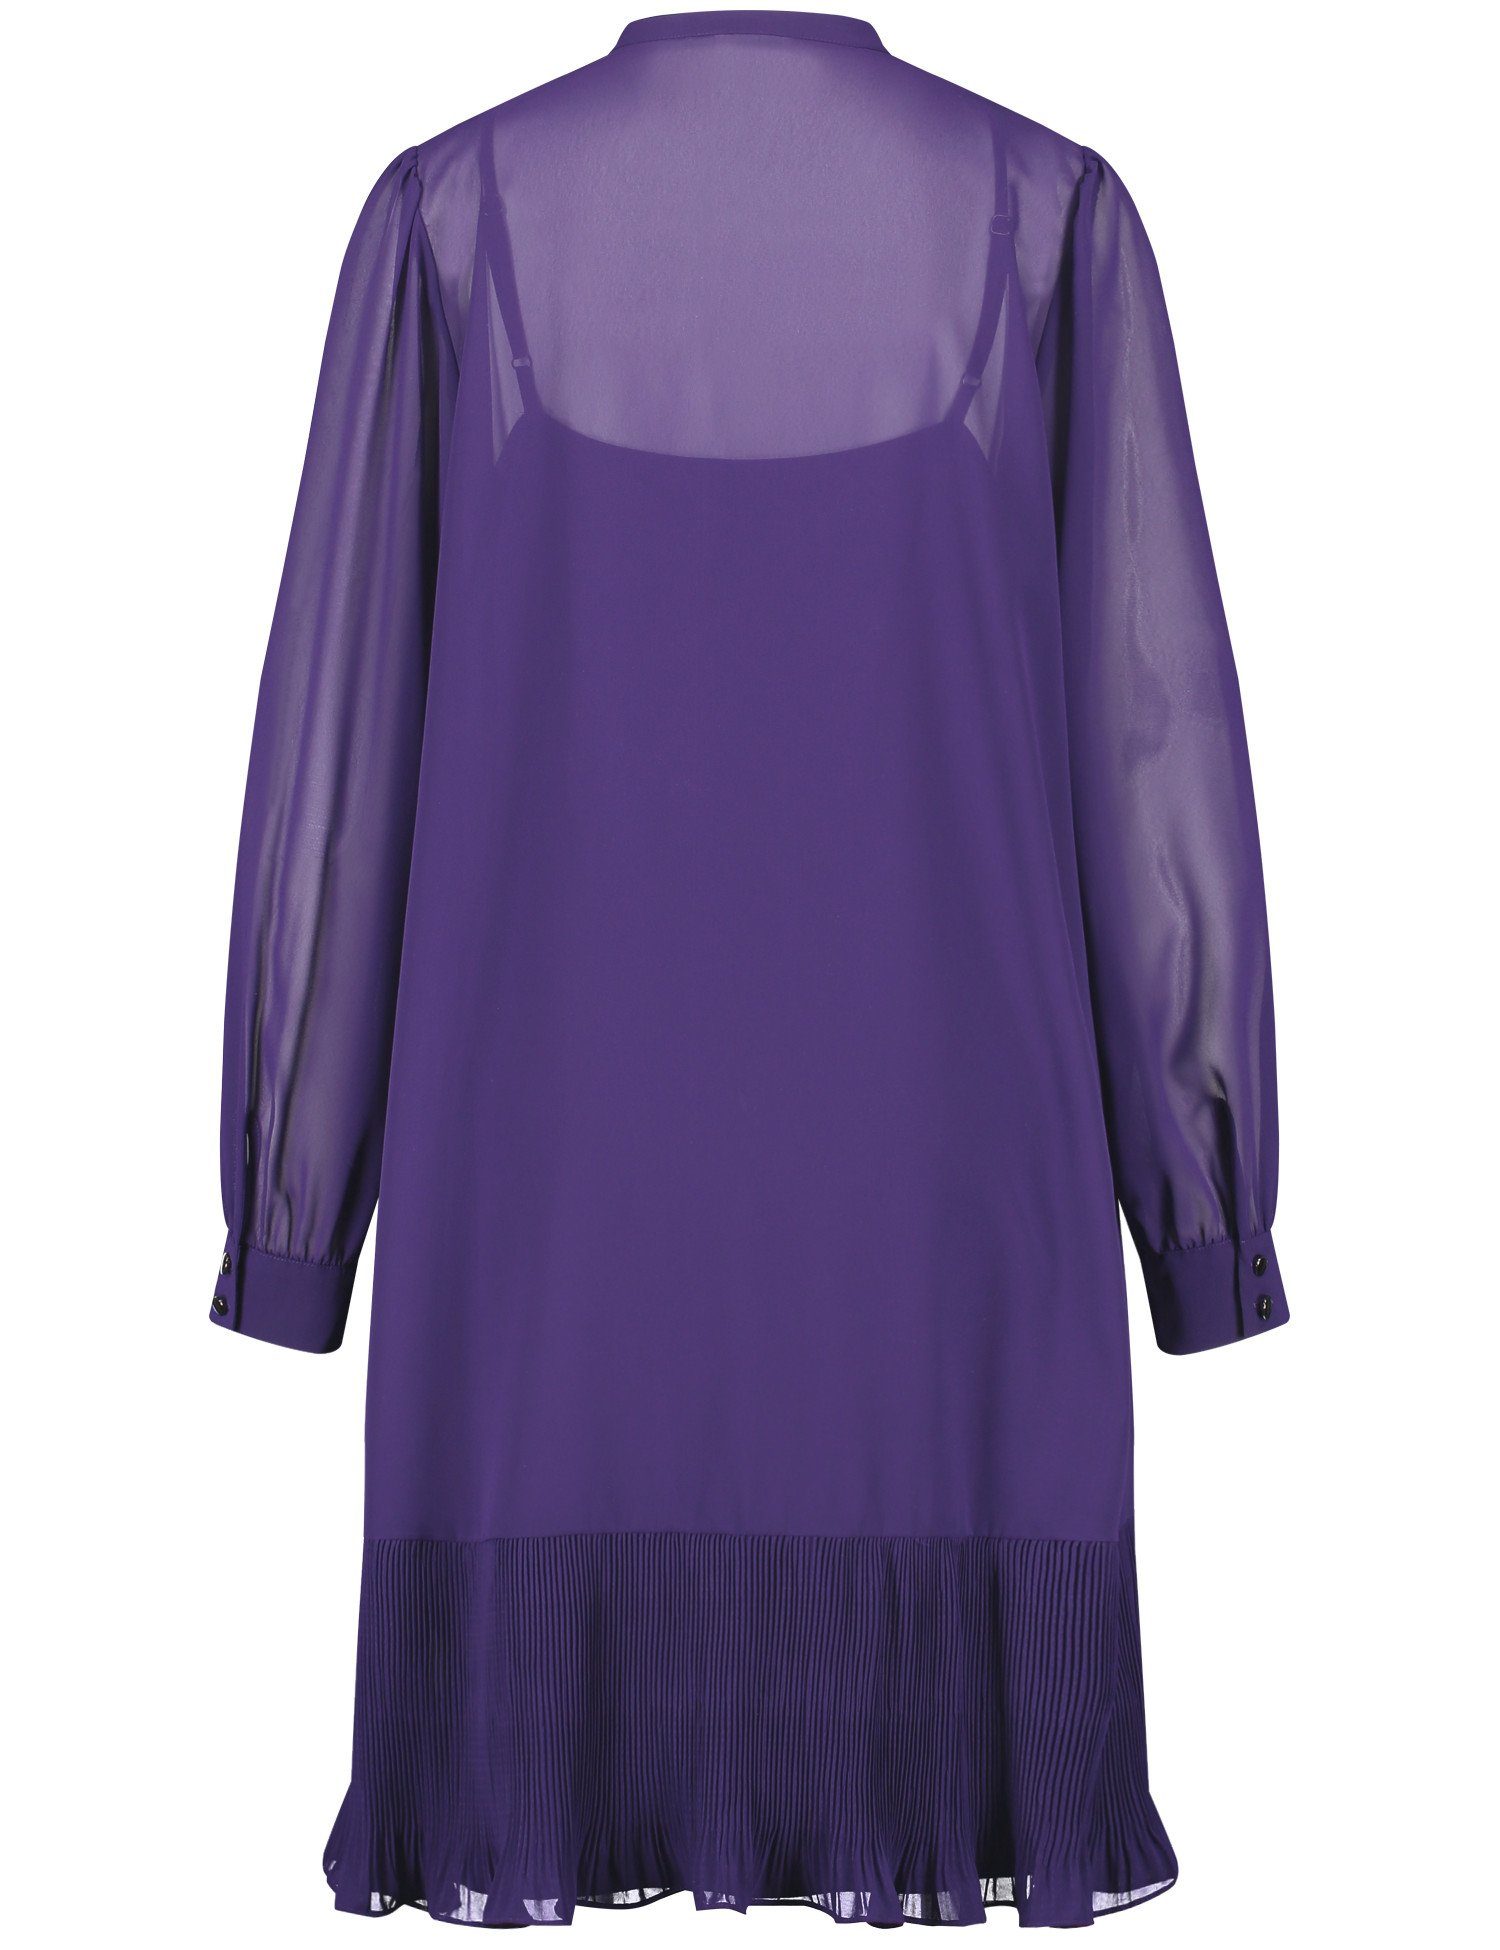 Midikleid Overlayer Violet semitransparentem GERRY Dark Kleid mit Zartes WEBER